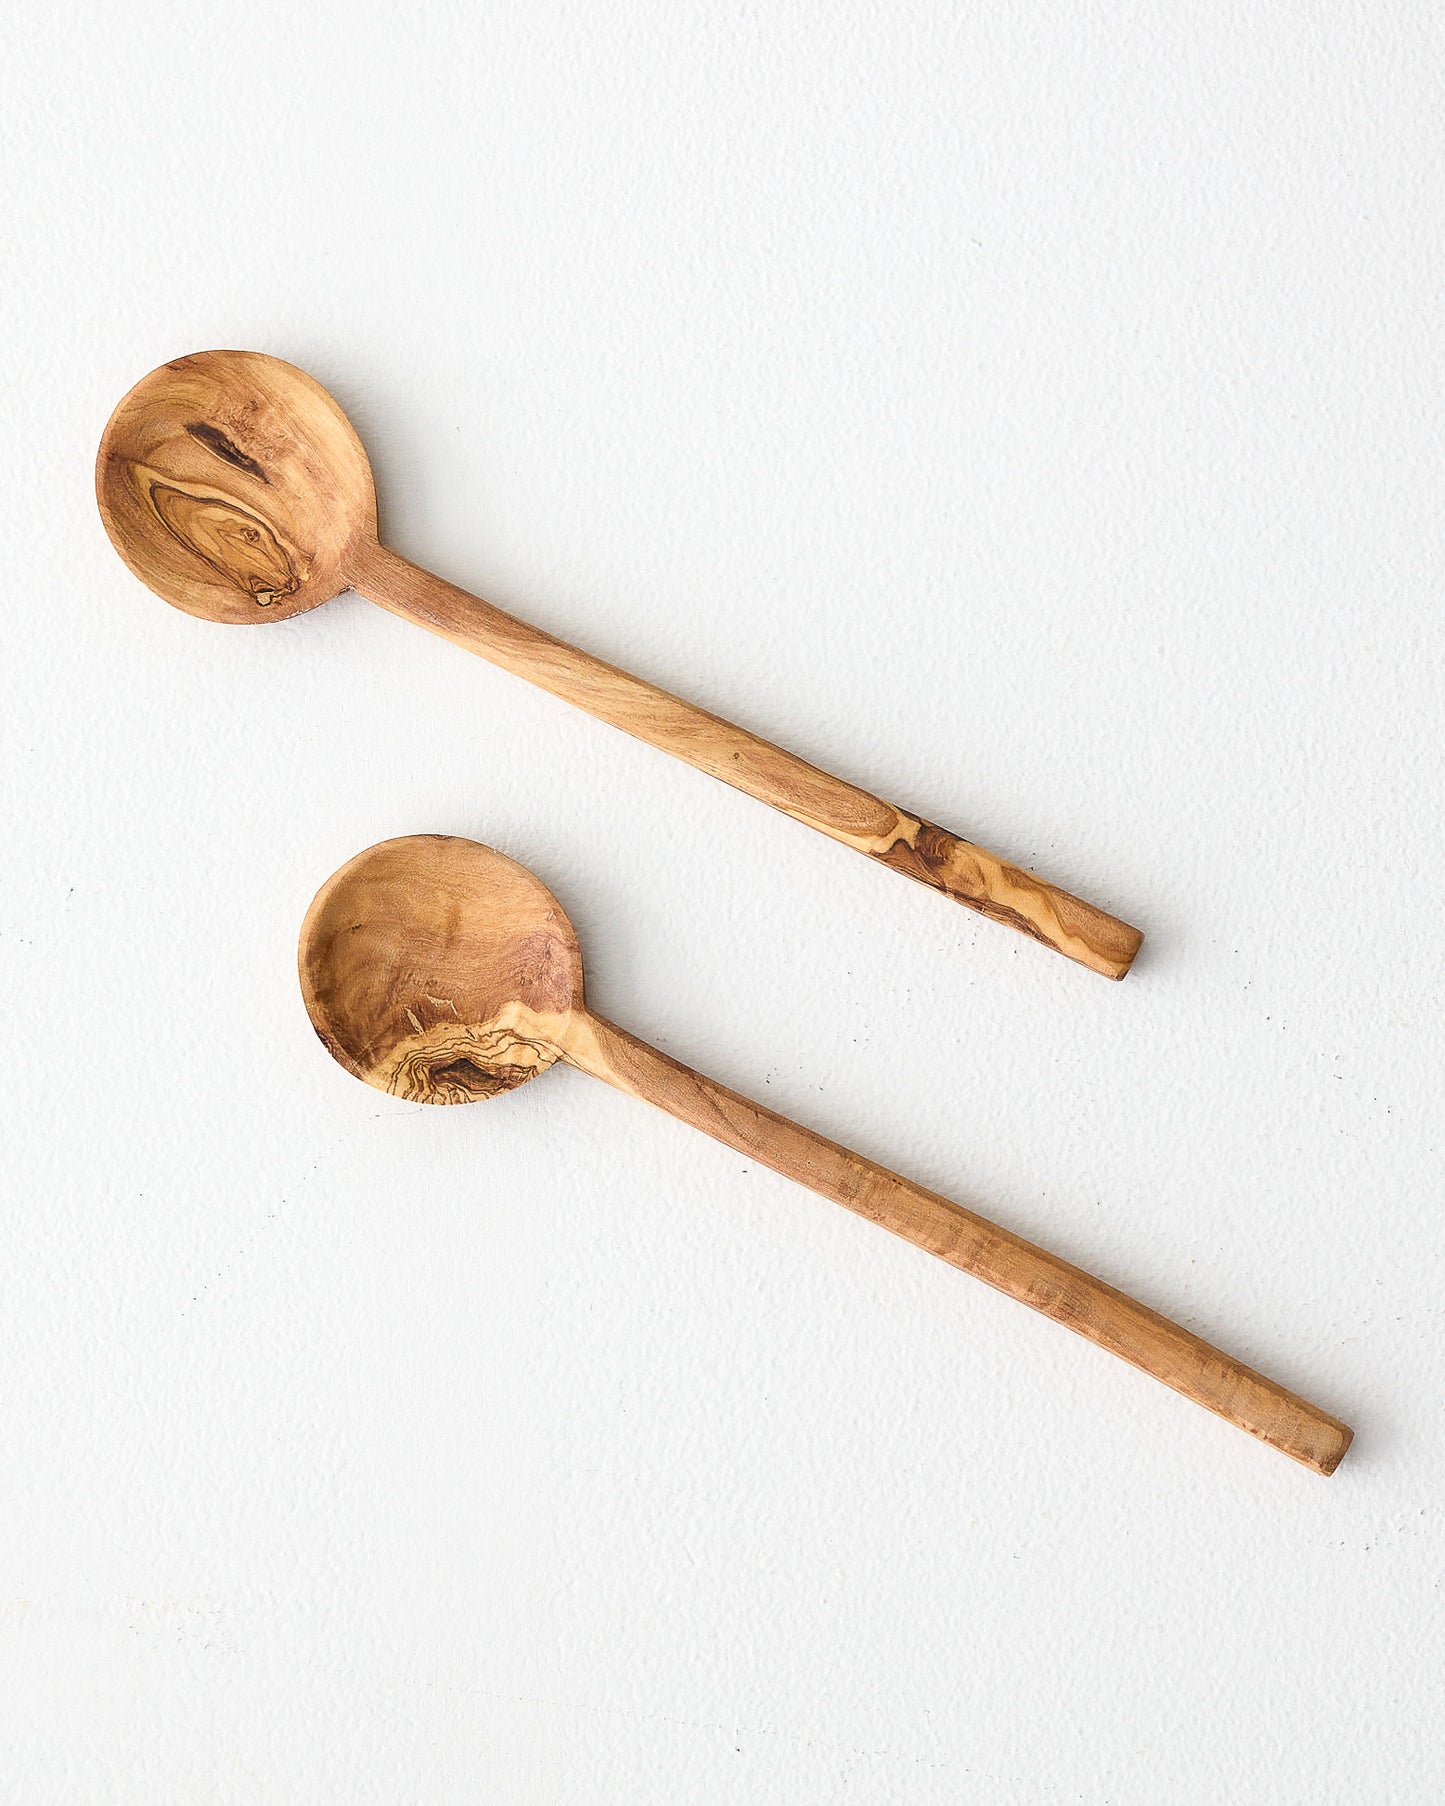 Mediterranean Spoon Set by Fairkind. Handcrafted by master artisans in Tunisia.